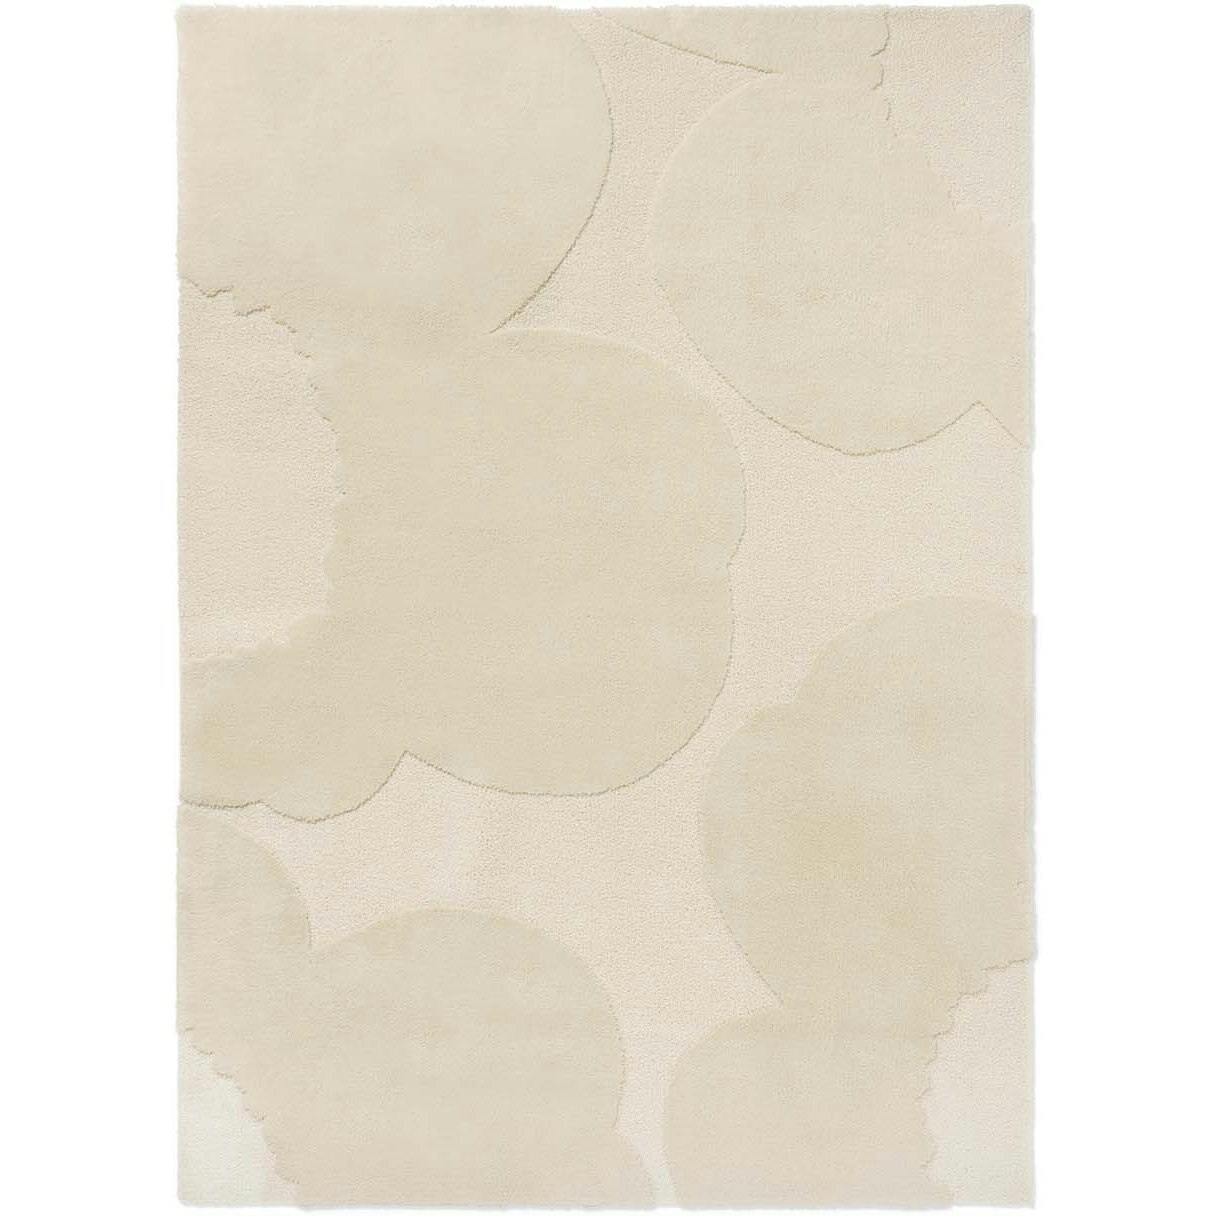 Marimekko Iso Unikko Tæppe 200x300 cm, Natural White